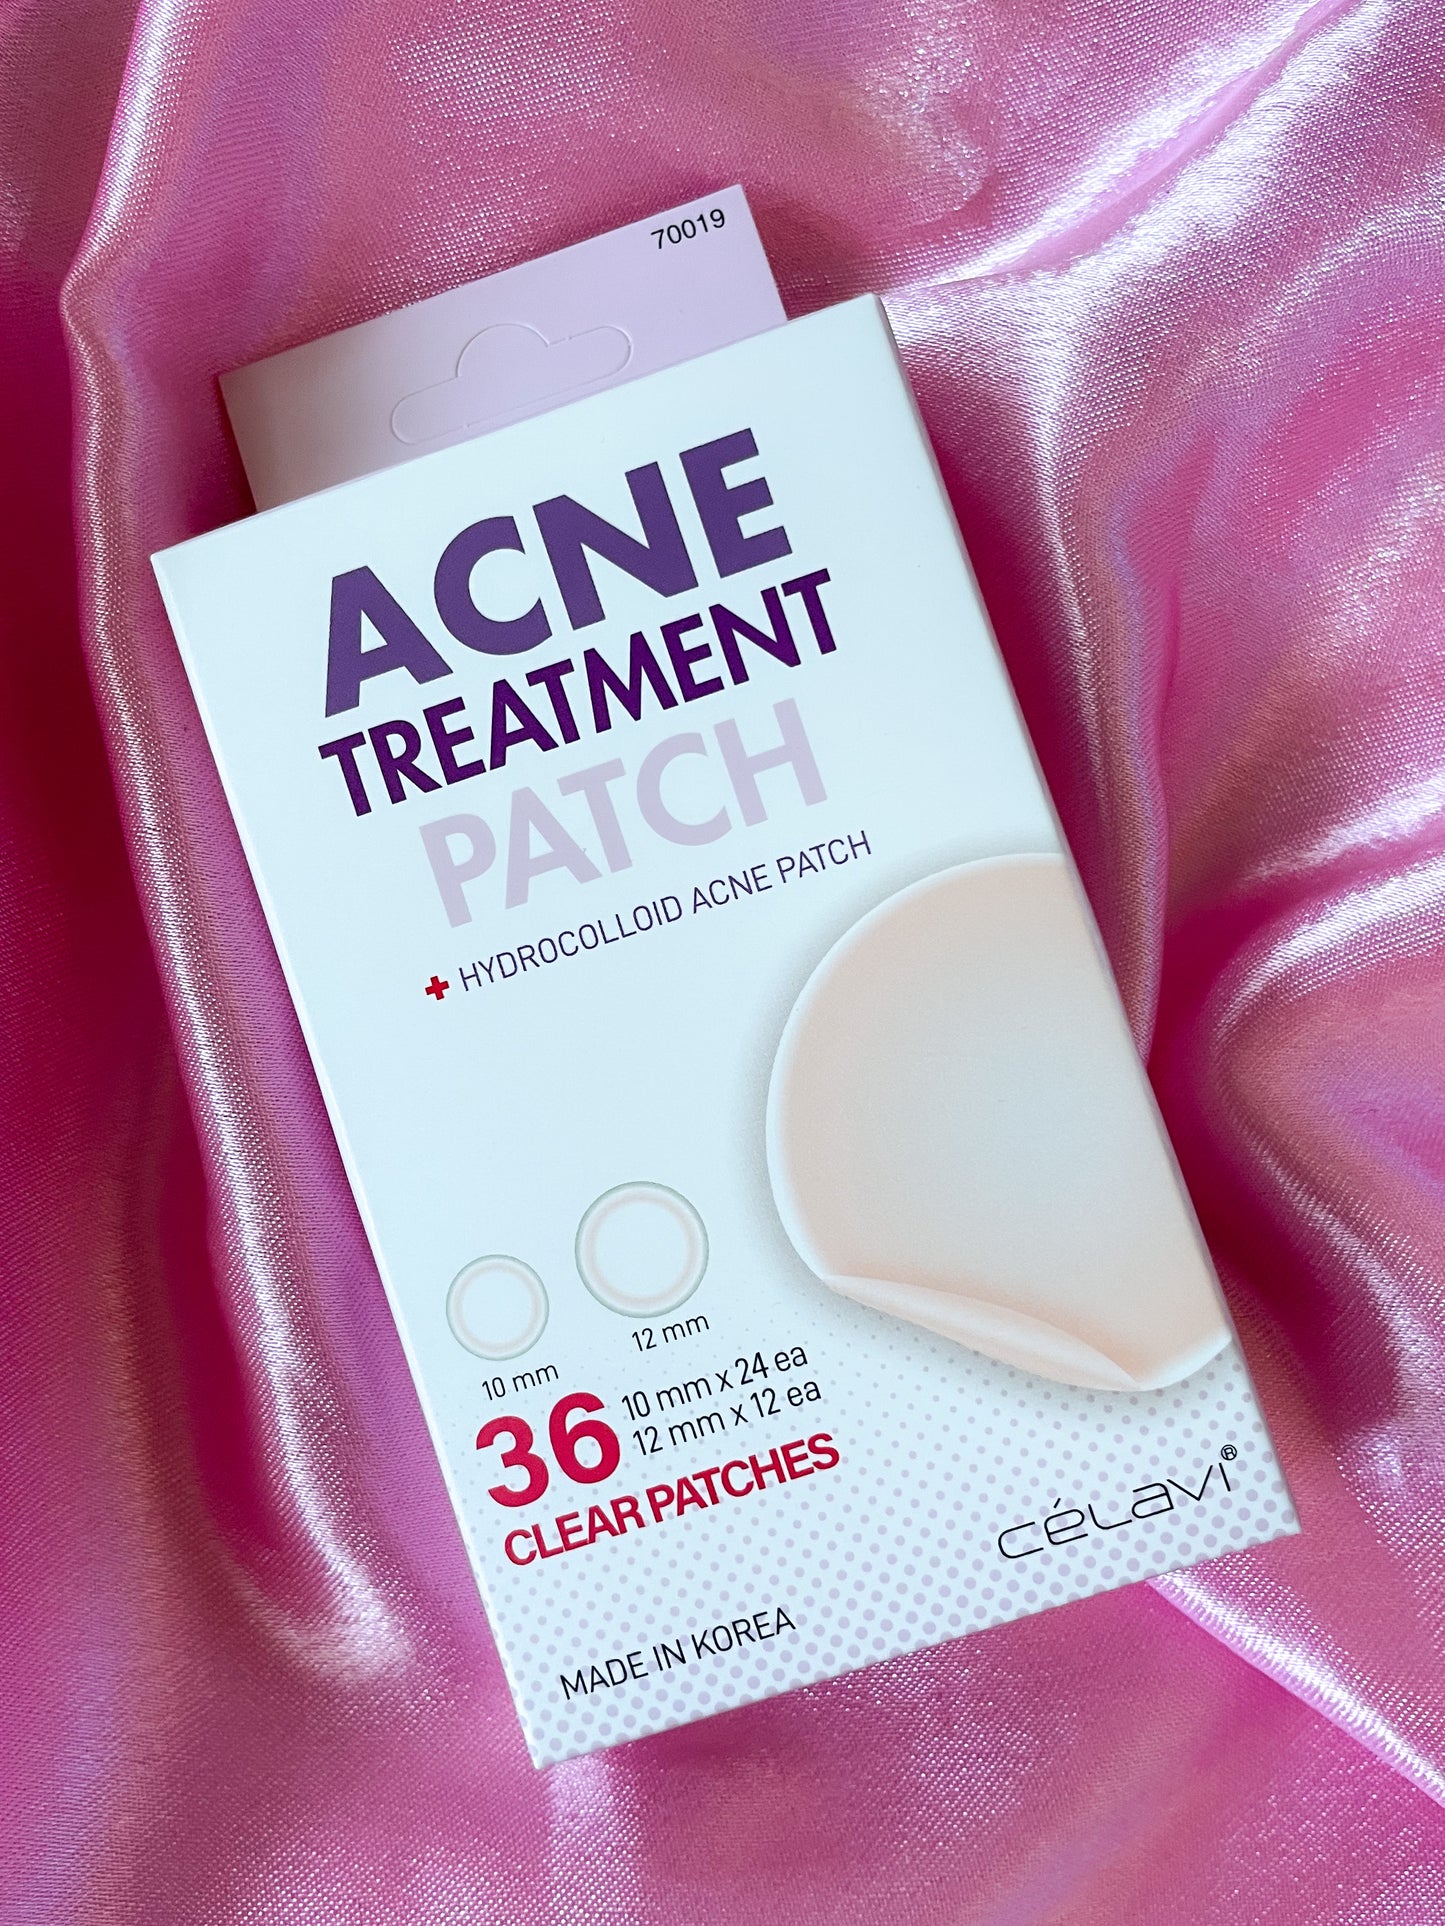 Acne treatment patch